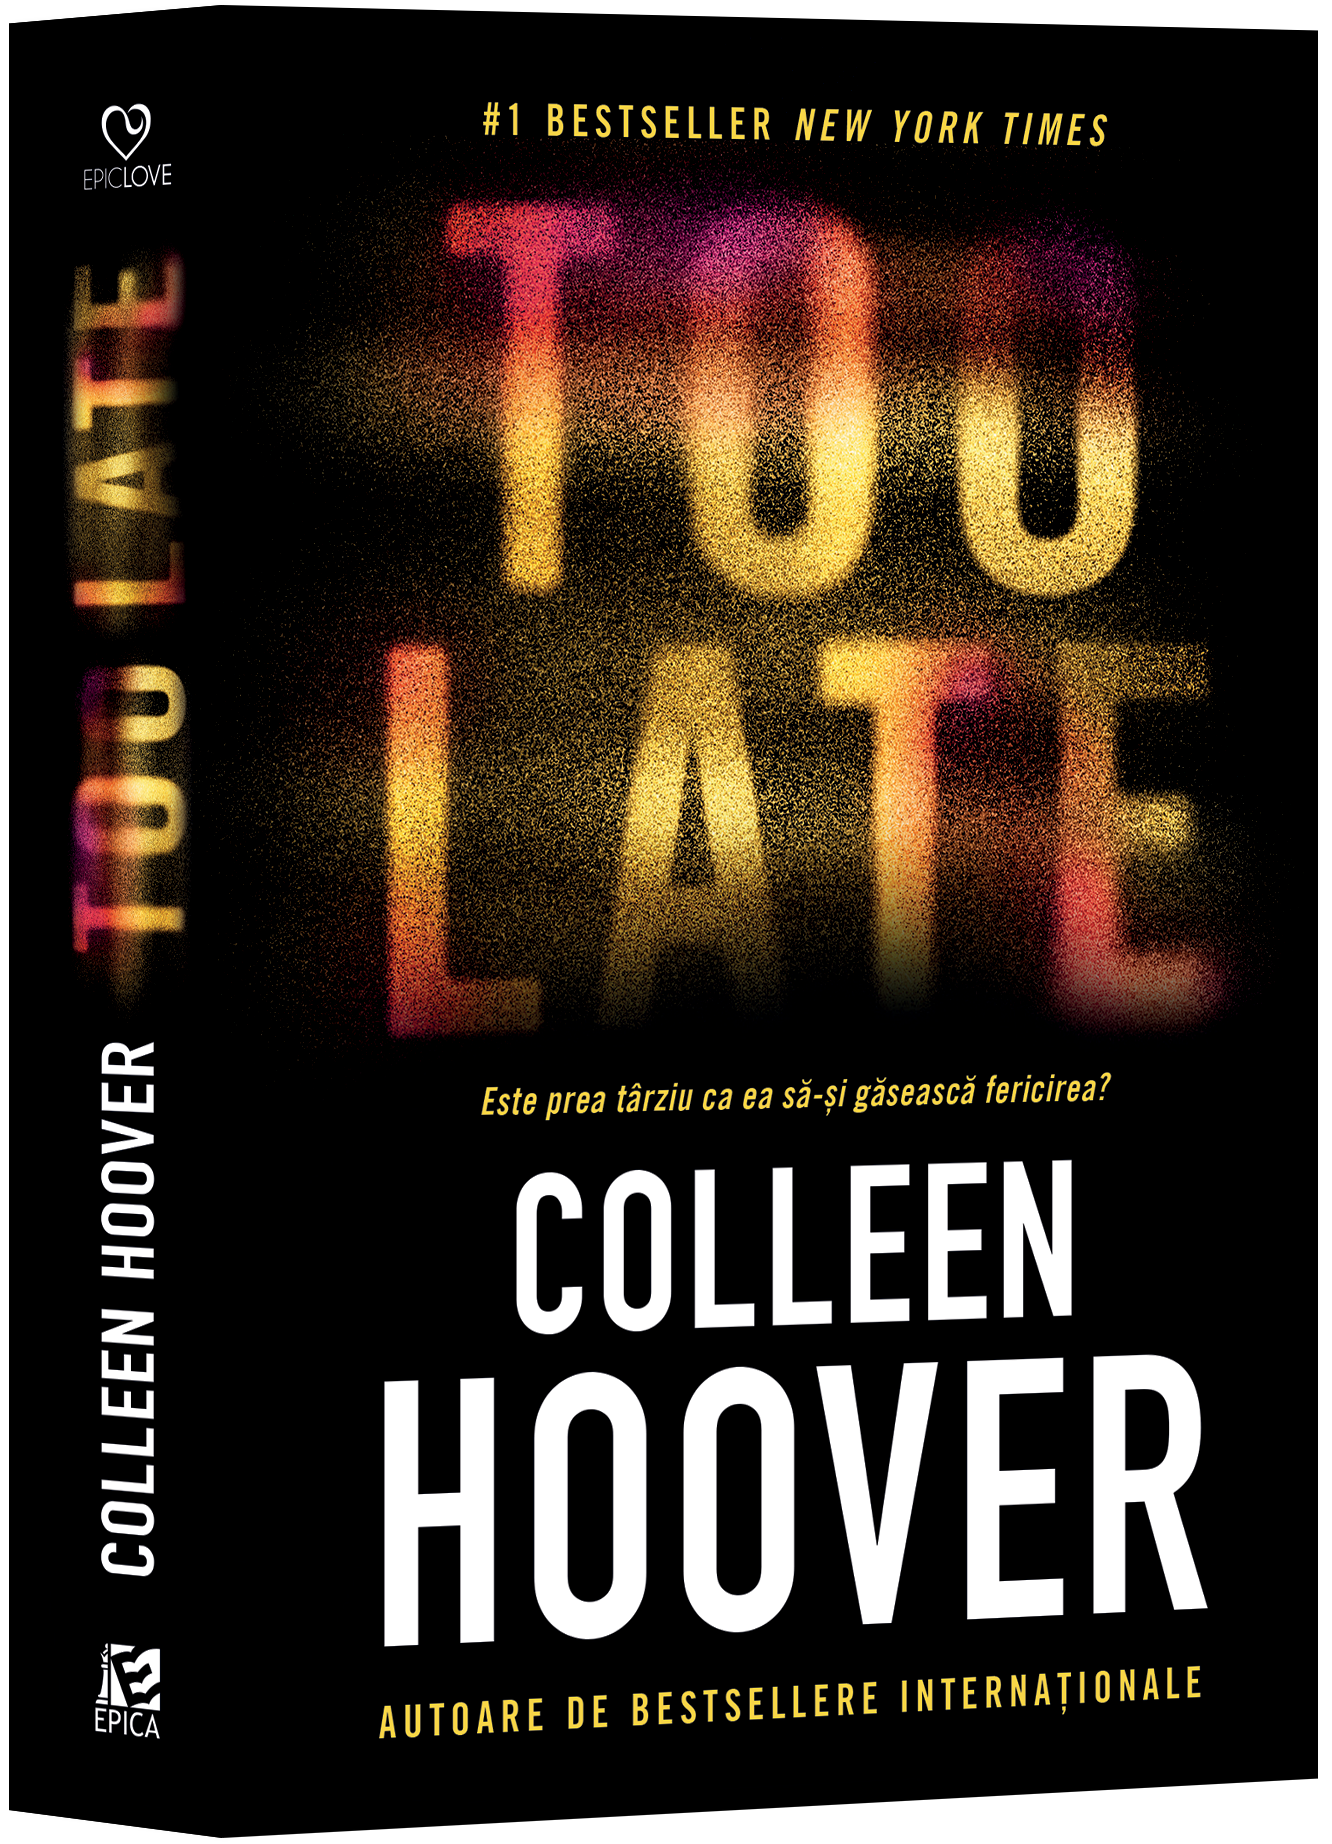 Too Late. Este prea tarziu ca ea sa-si gaseasca fericirea? | Colleen Hoover